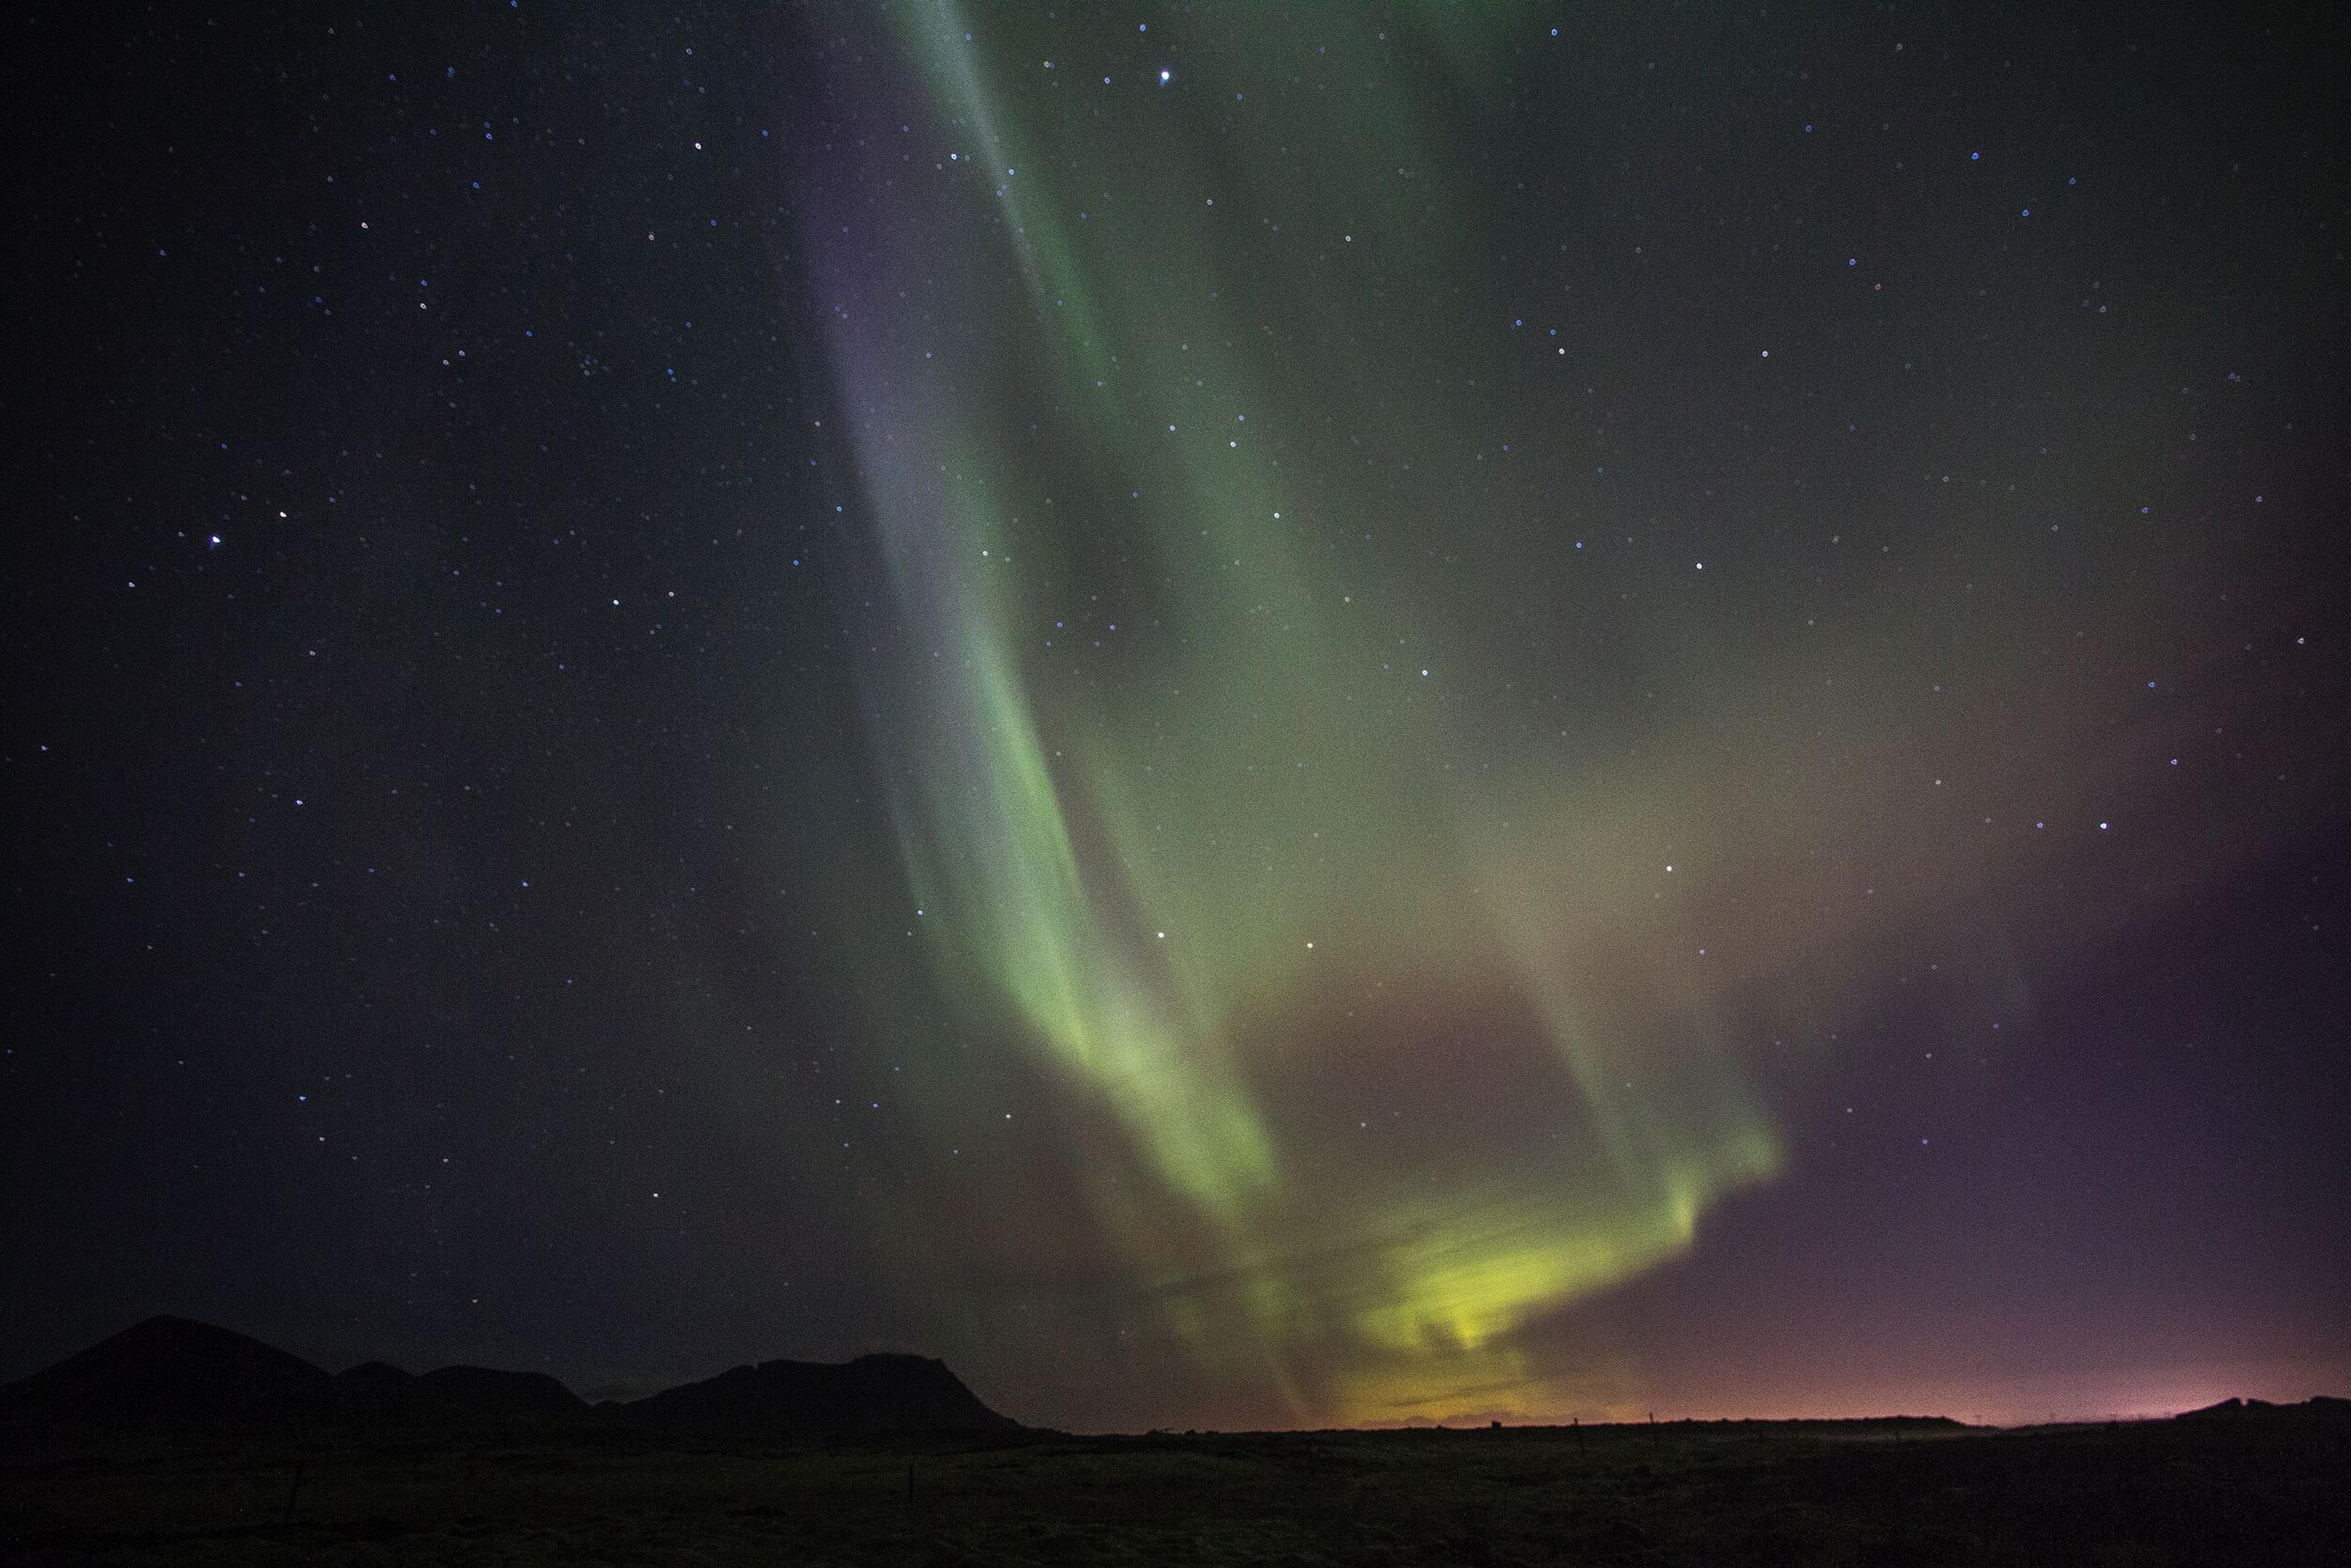 Northern lights dancing ovar a mountain landscape in Iceland